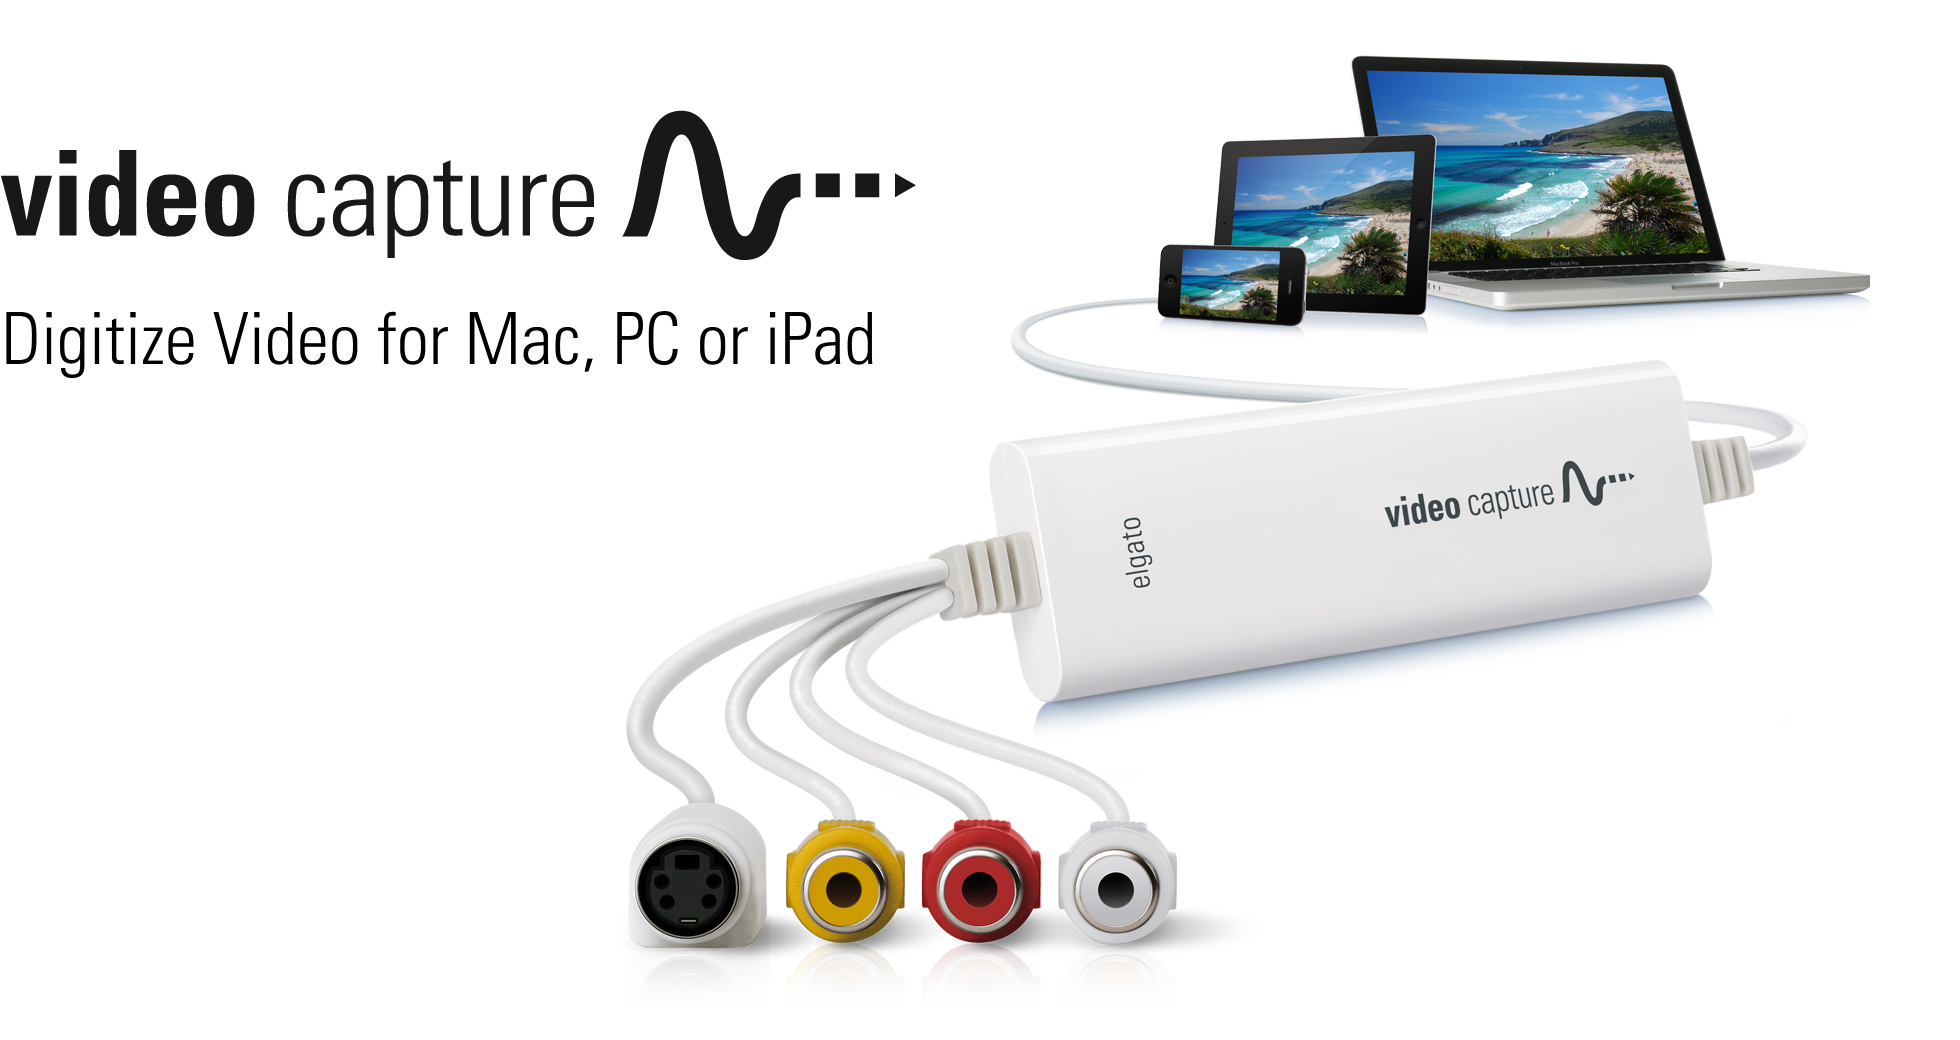 Pinnacle video capture software